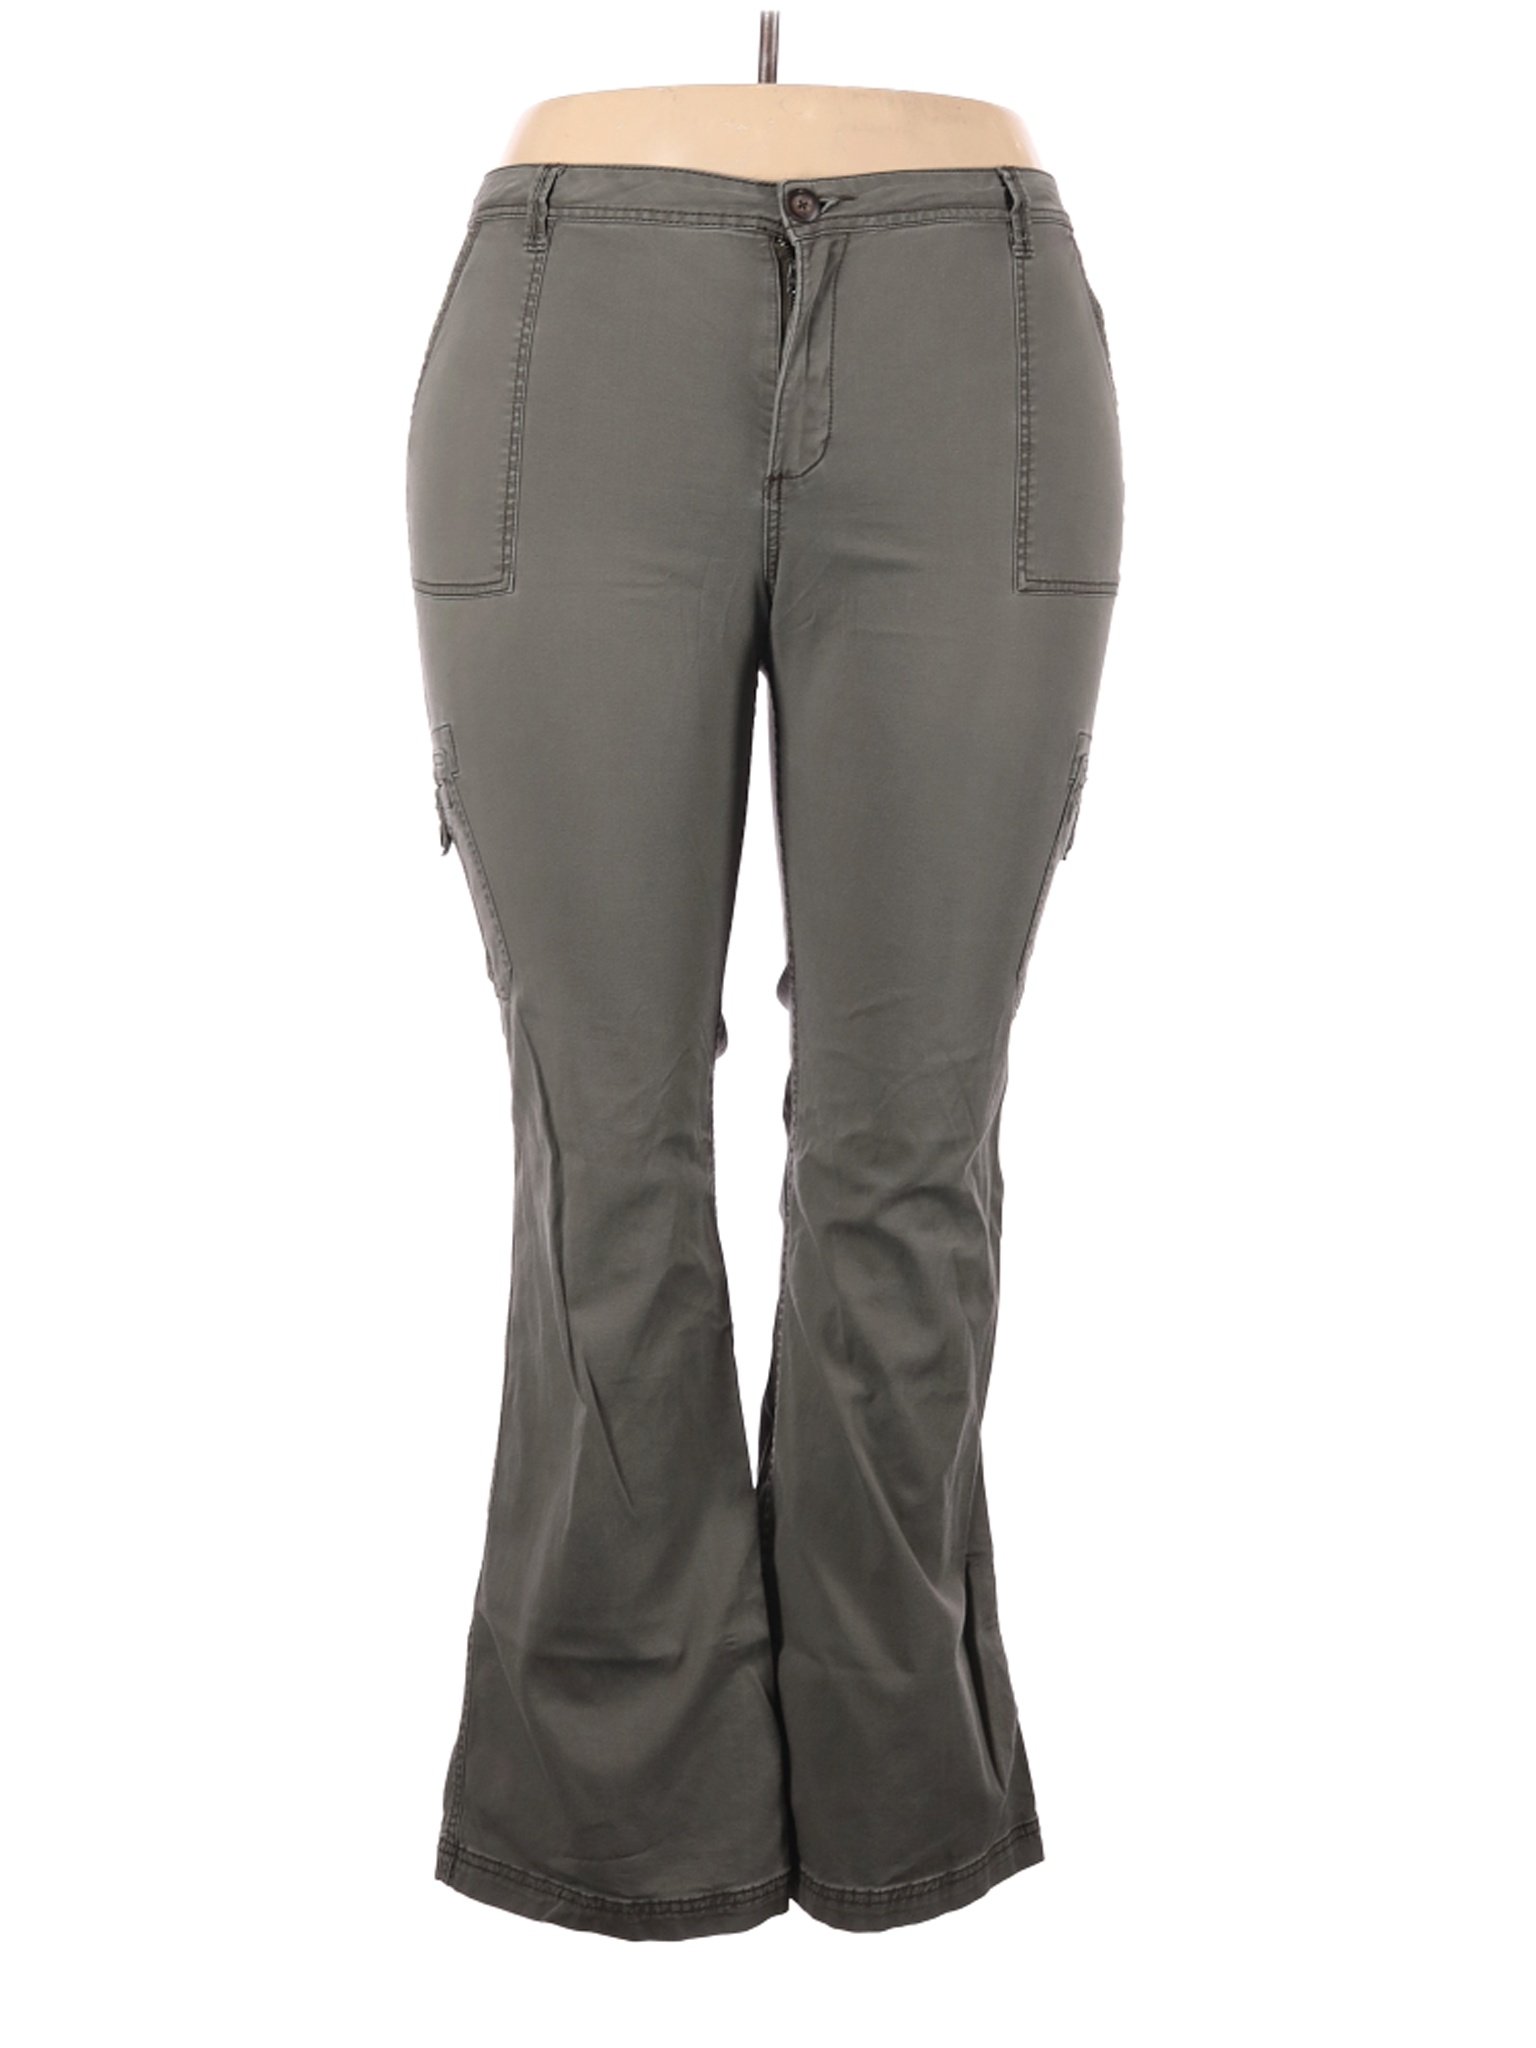 merona women's cargo pants